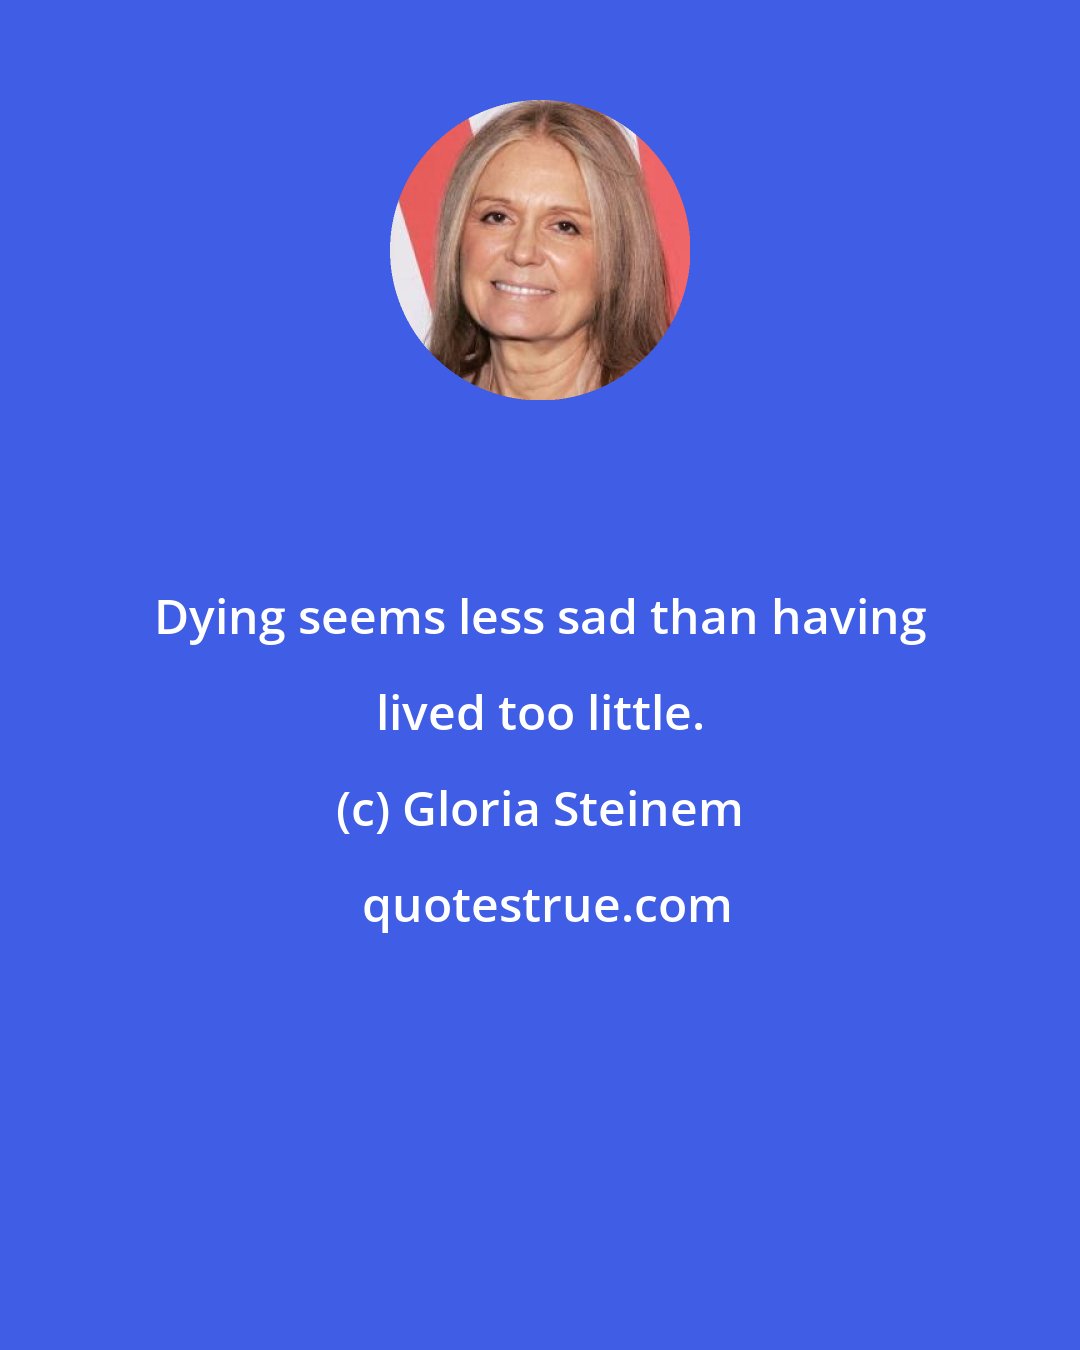 Gloria Steinem: Dying seems less sad than having lived too little.